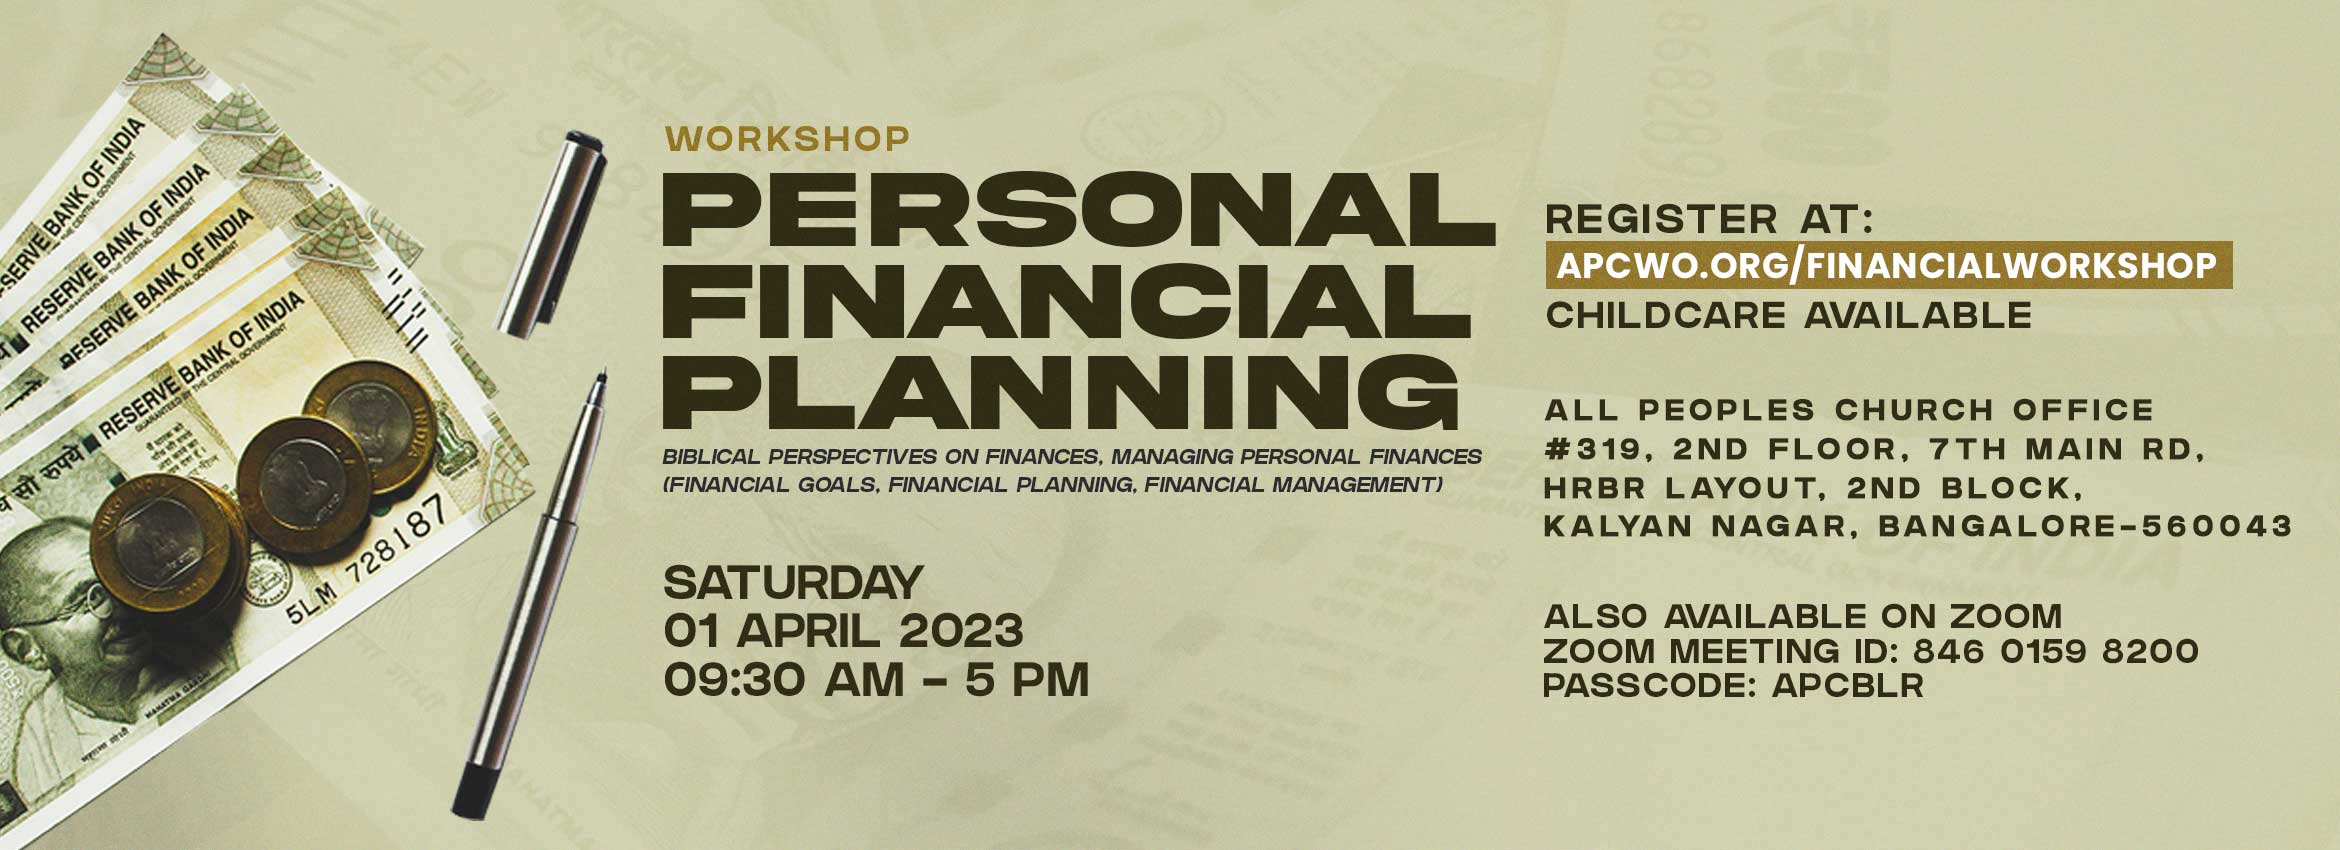 financial planning workshop